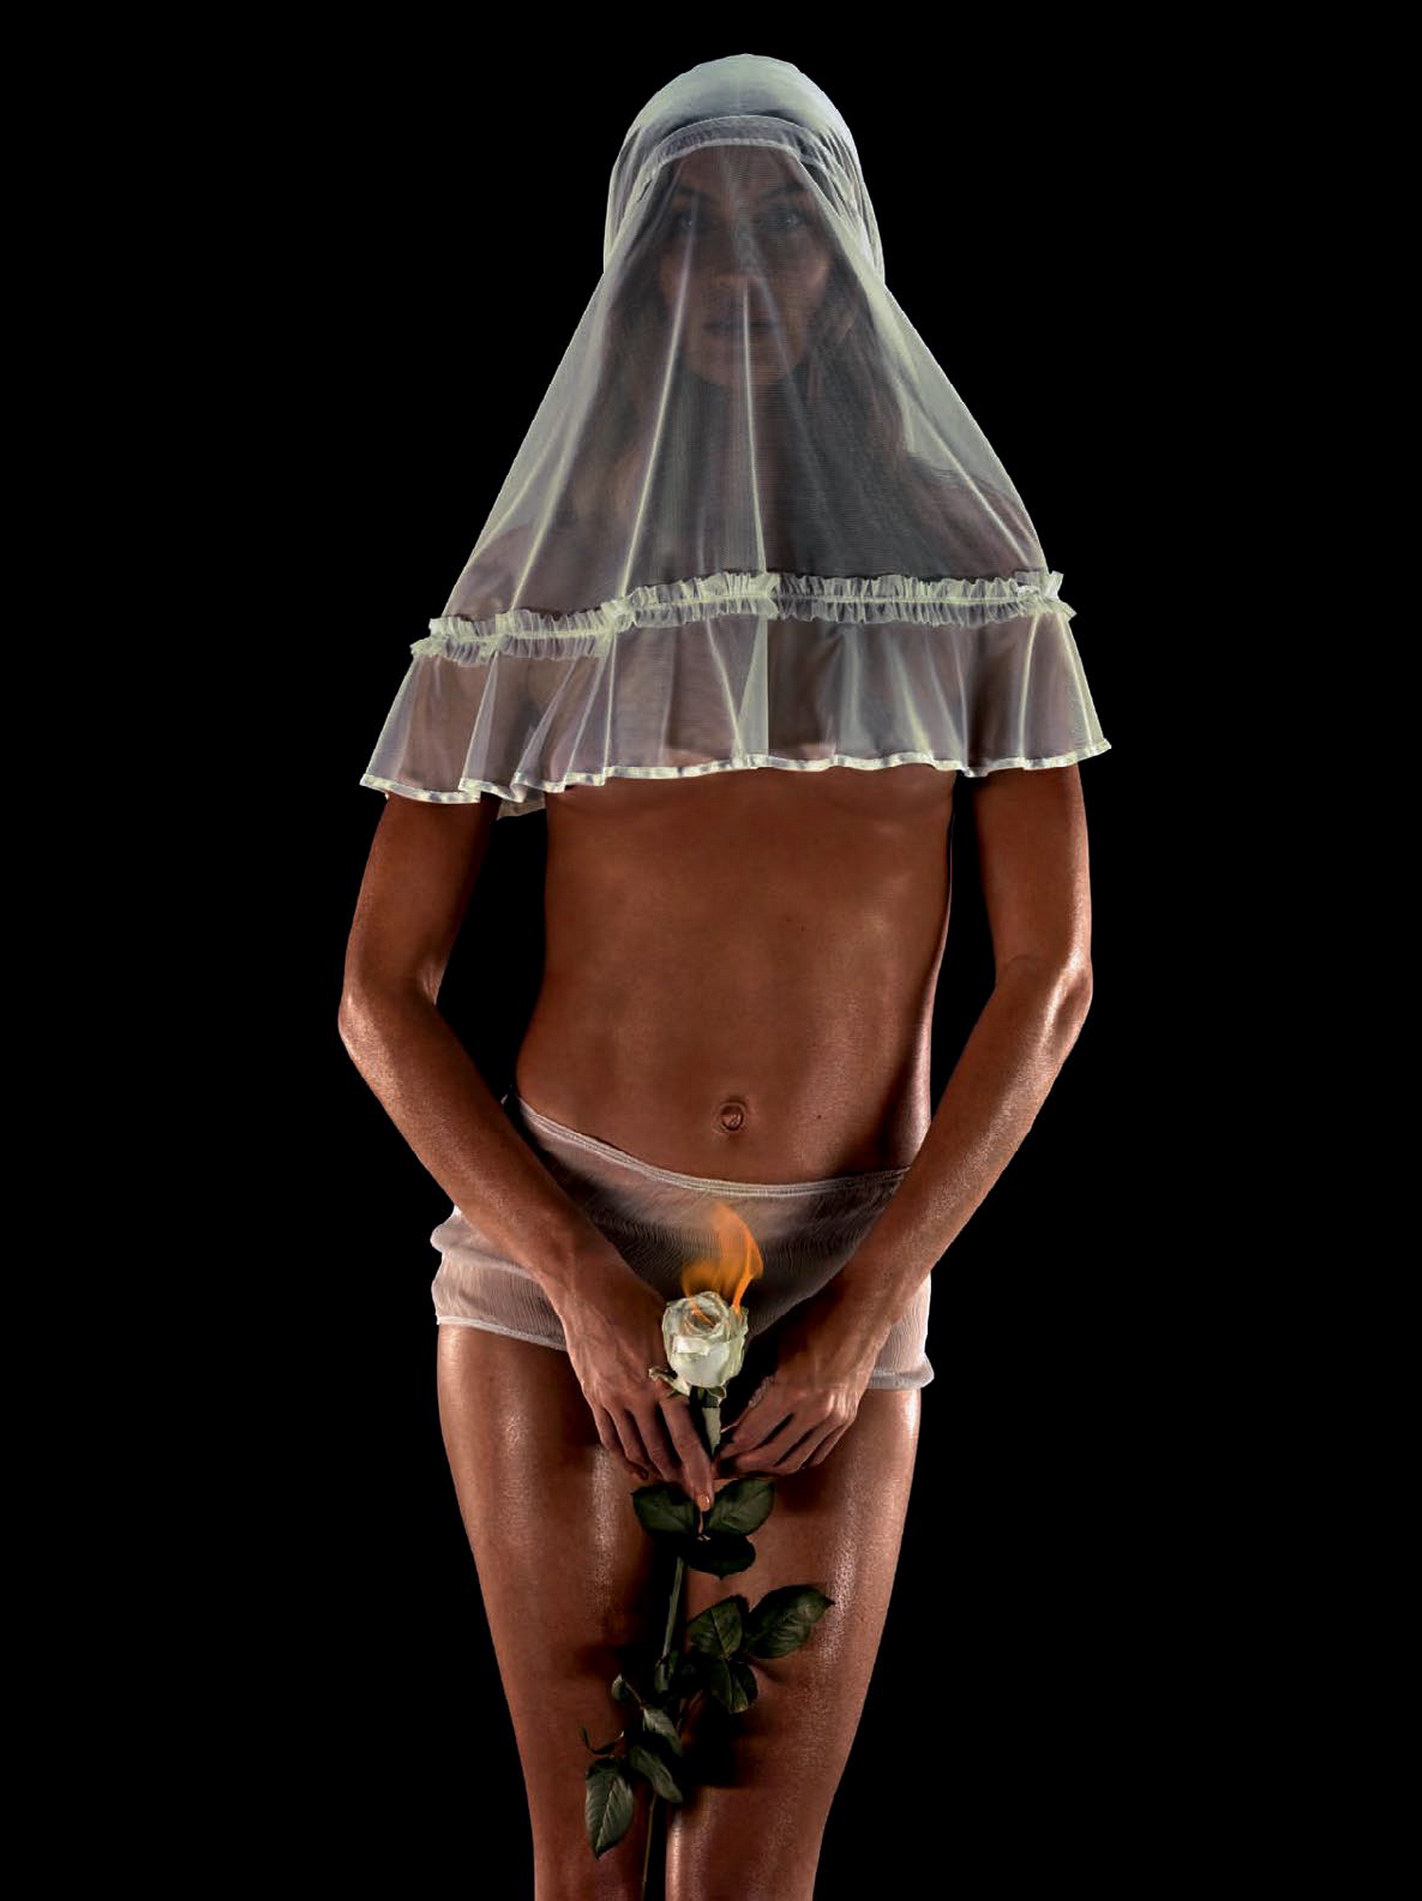 Gisele Bundchen topless for Vogue Brazil 2015 May 34x HQ 12.jpg